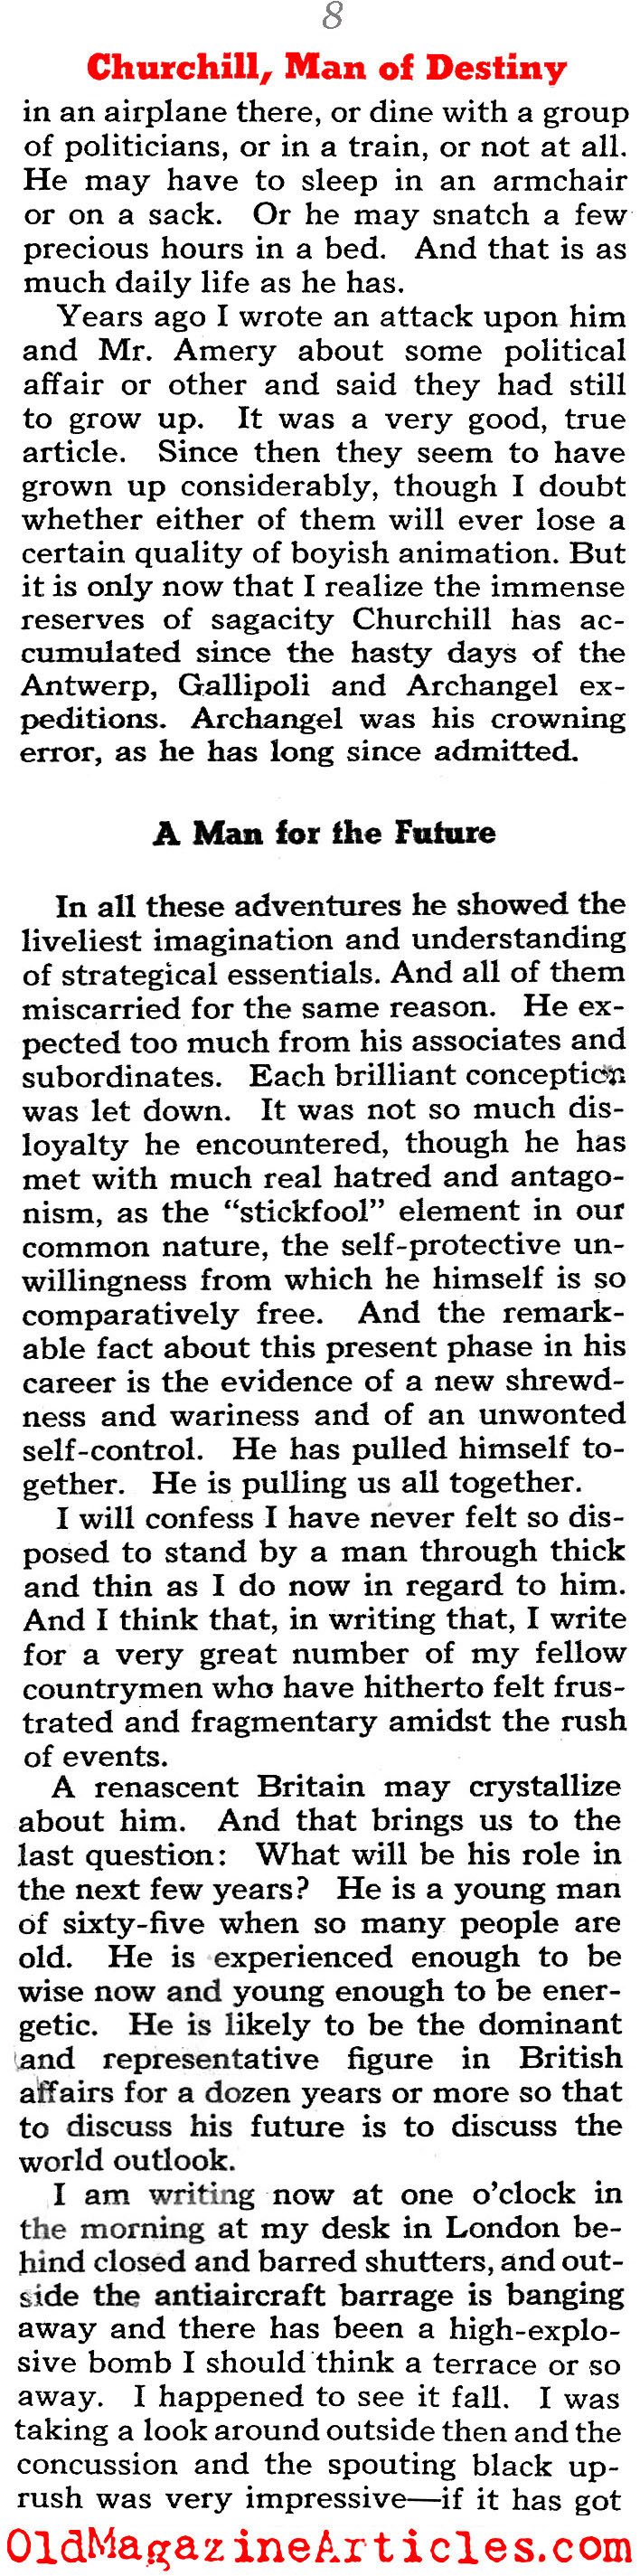 H.G. Wells on Winston Churchill (Collier's Magazine, 1940)